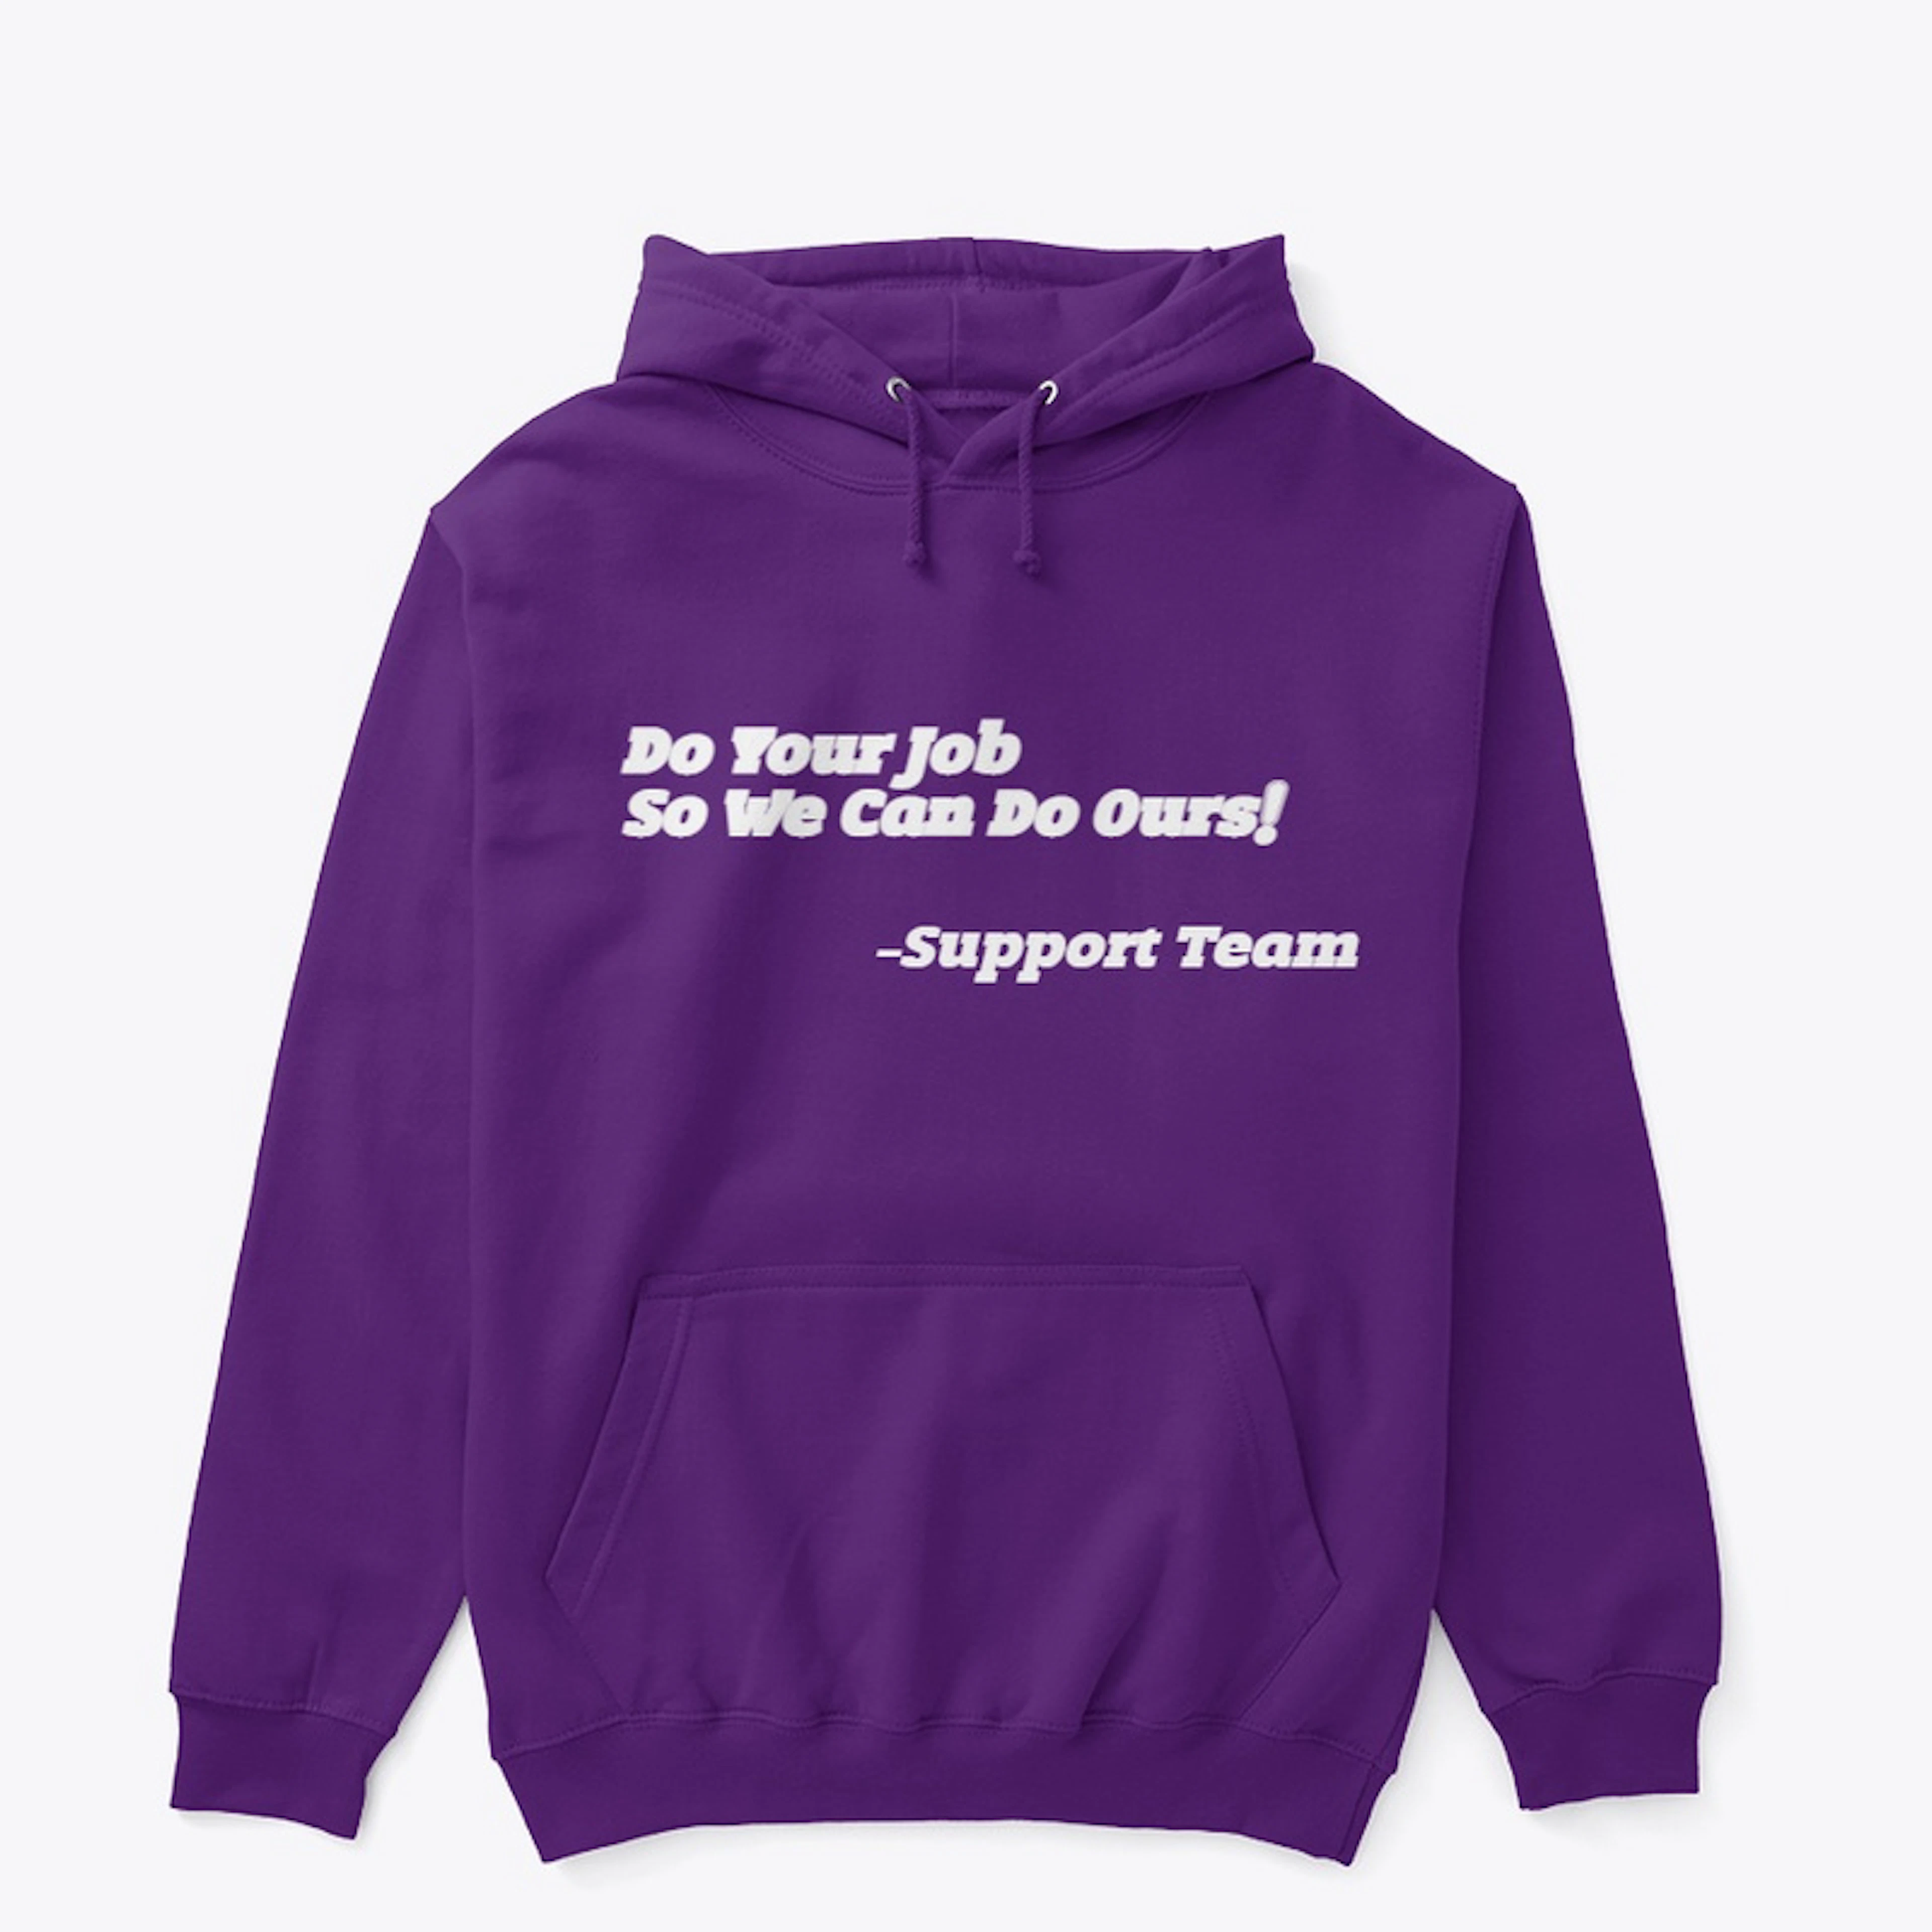 Support Team Mantra